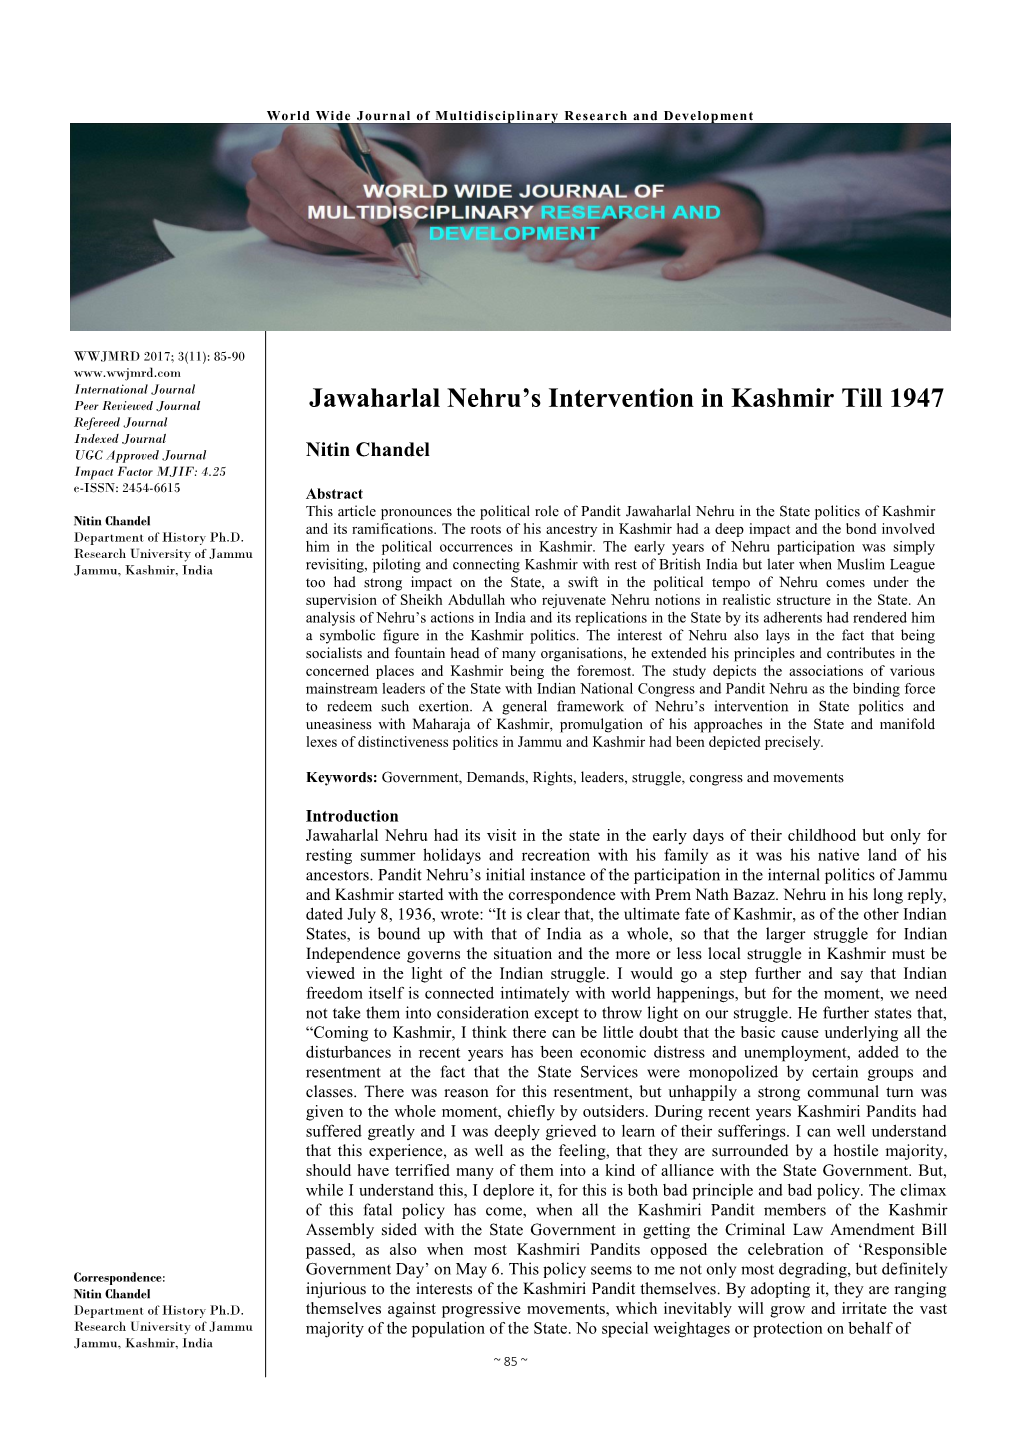 Jawaharlal Nehru's Intervention in Kashmir Till 1947